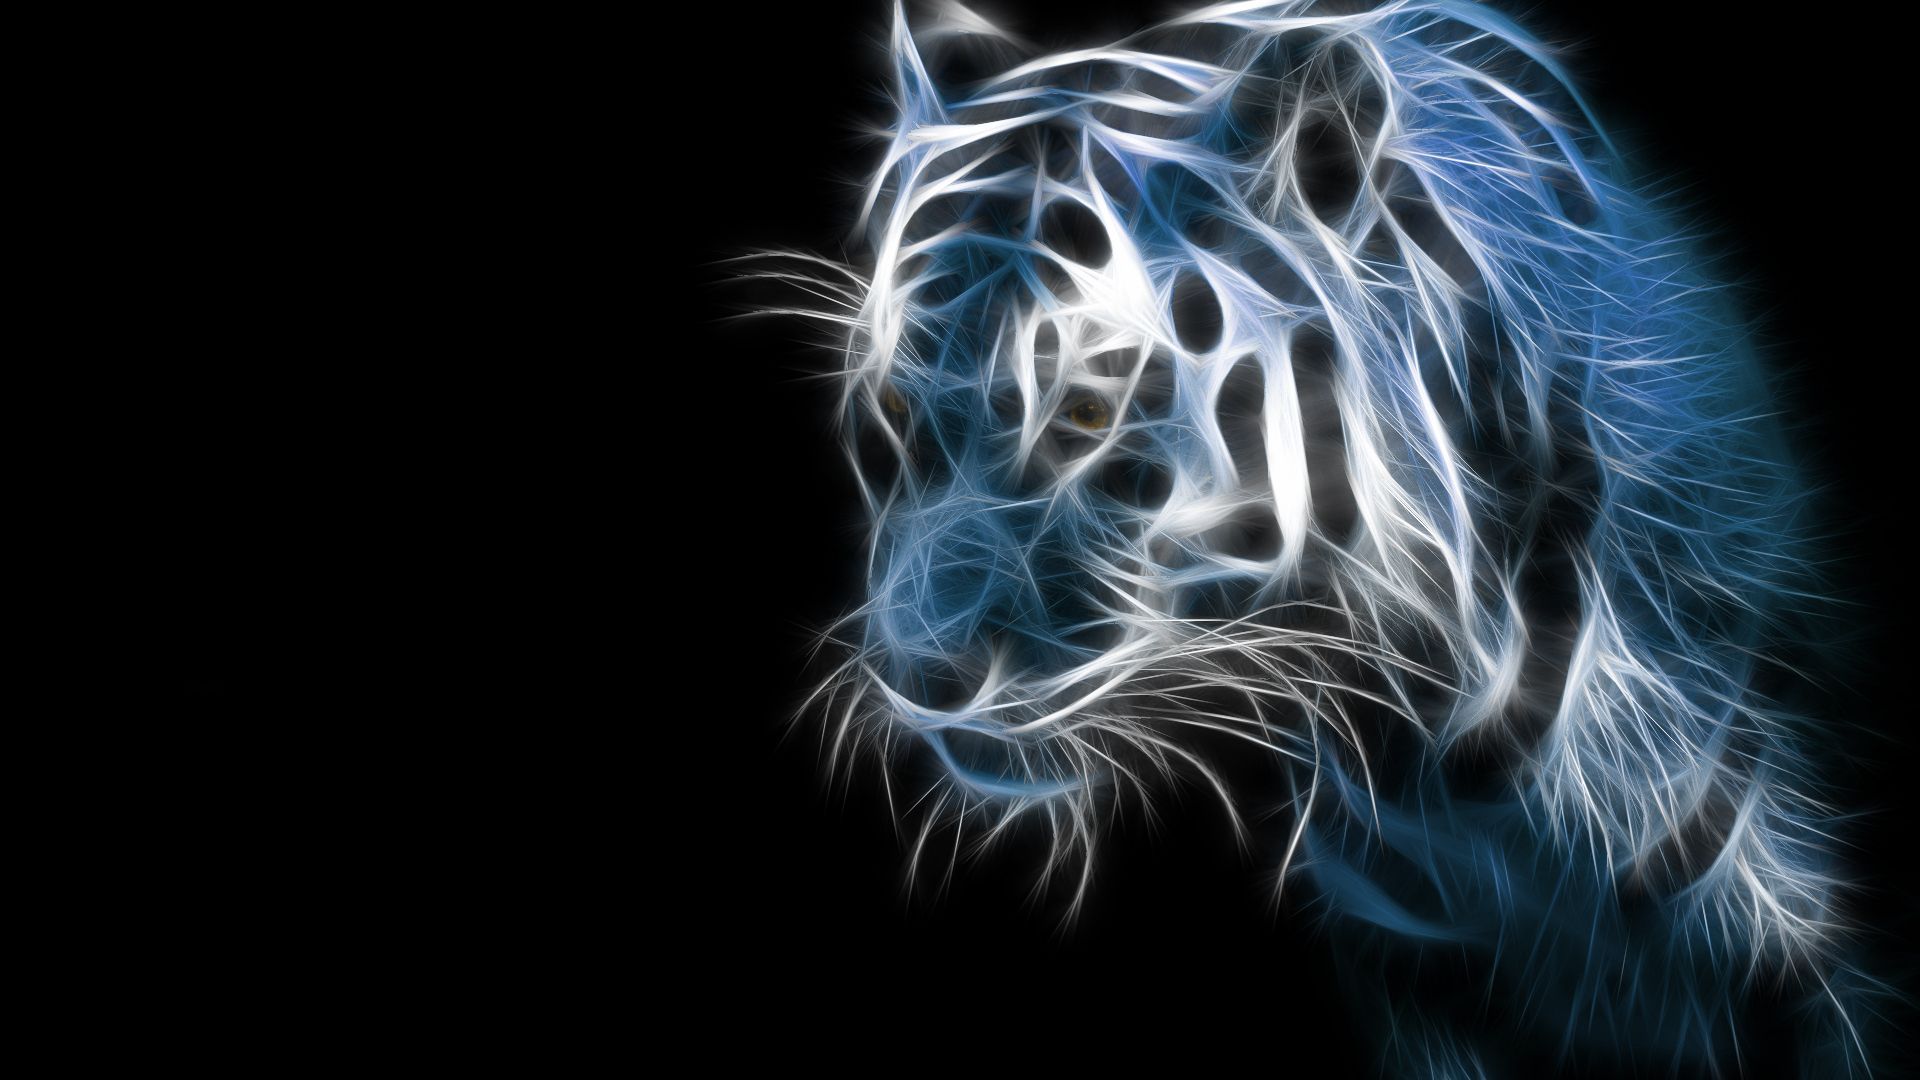 Download Tiger Animal Wallpaper 1920x1080 | Full HD Wallpapers